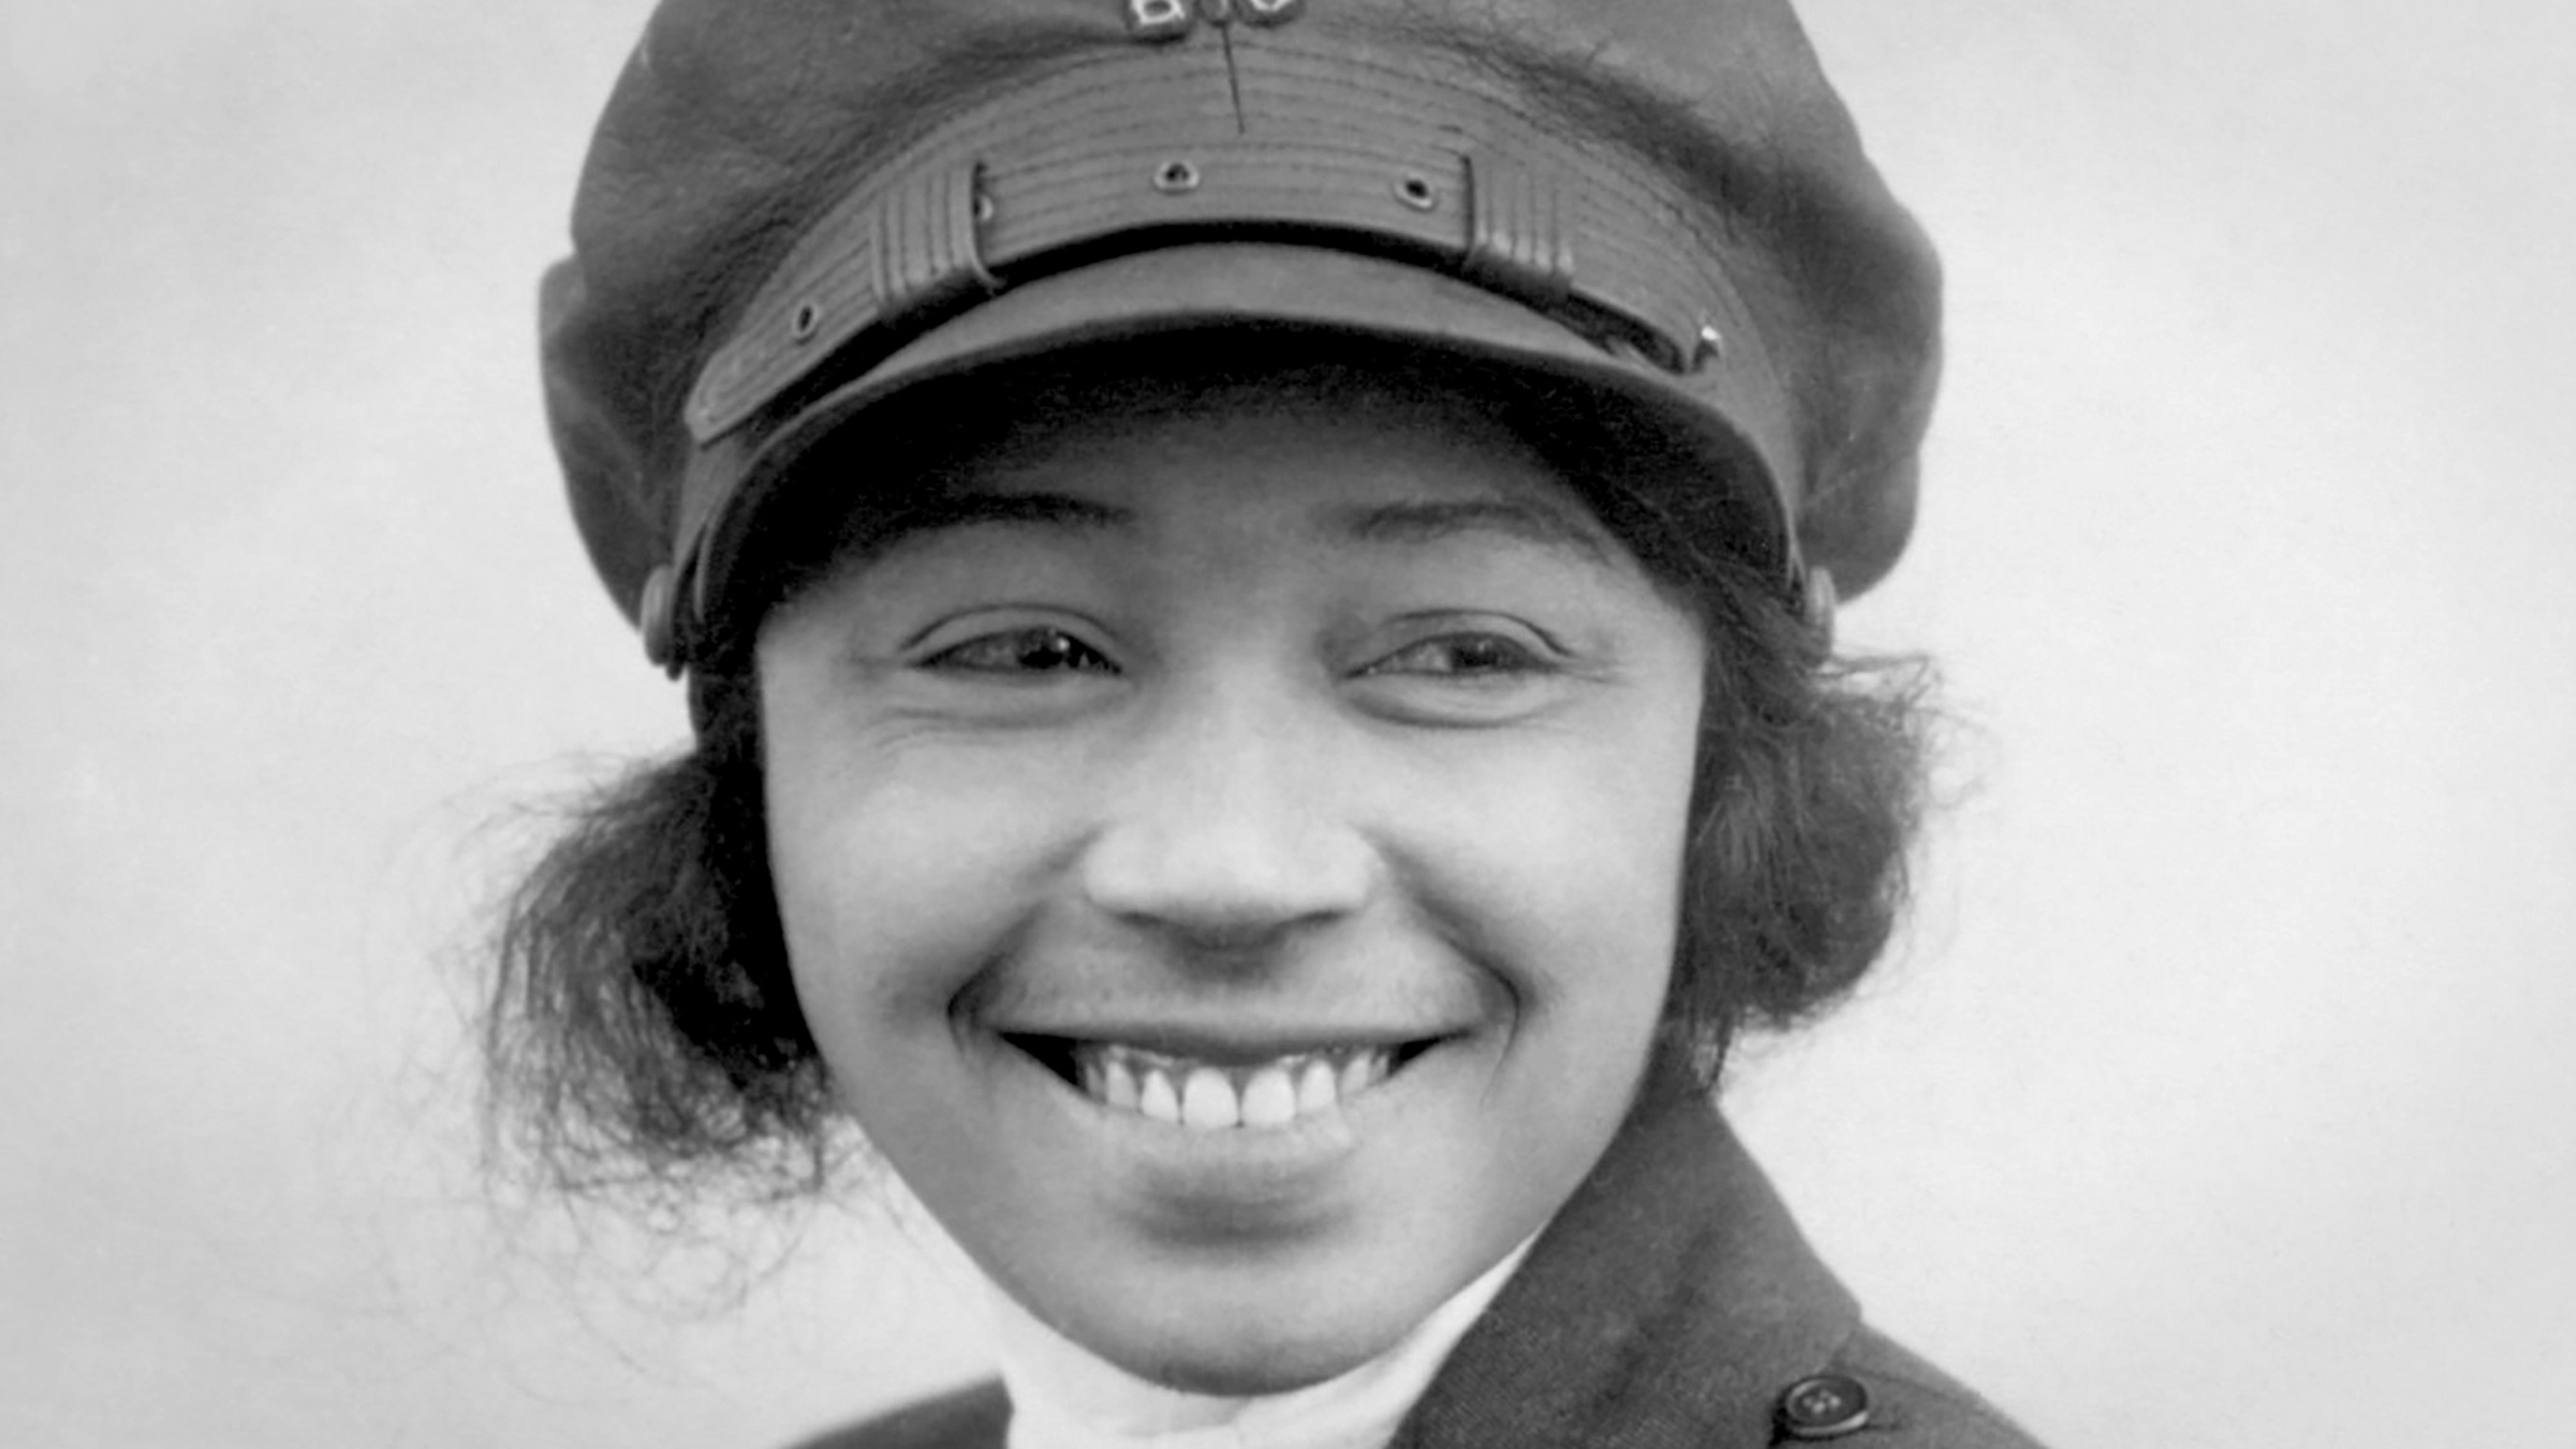 Bessie Coleman, première aviatrice noire